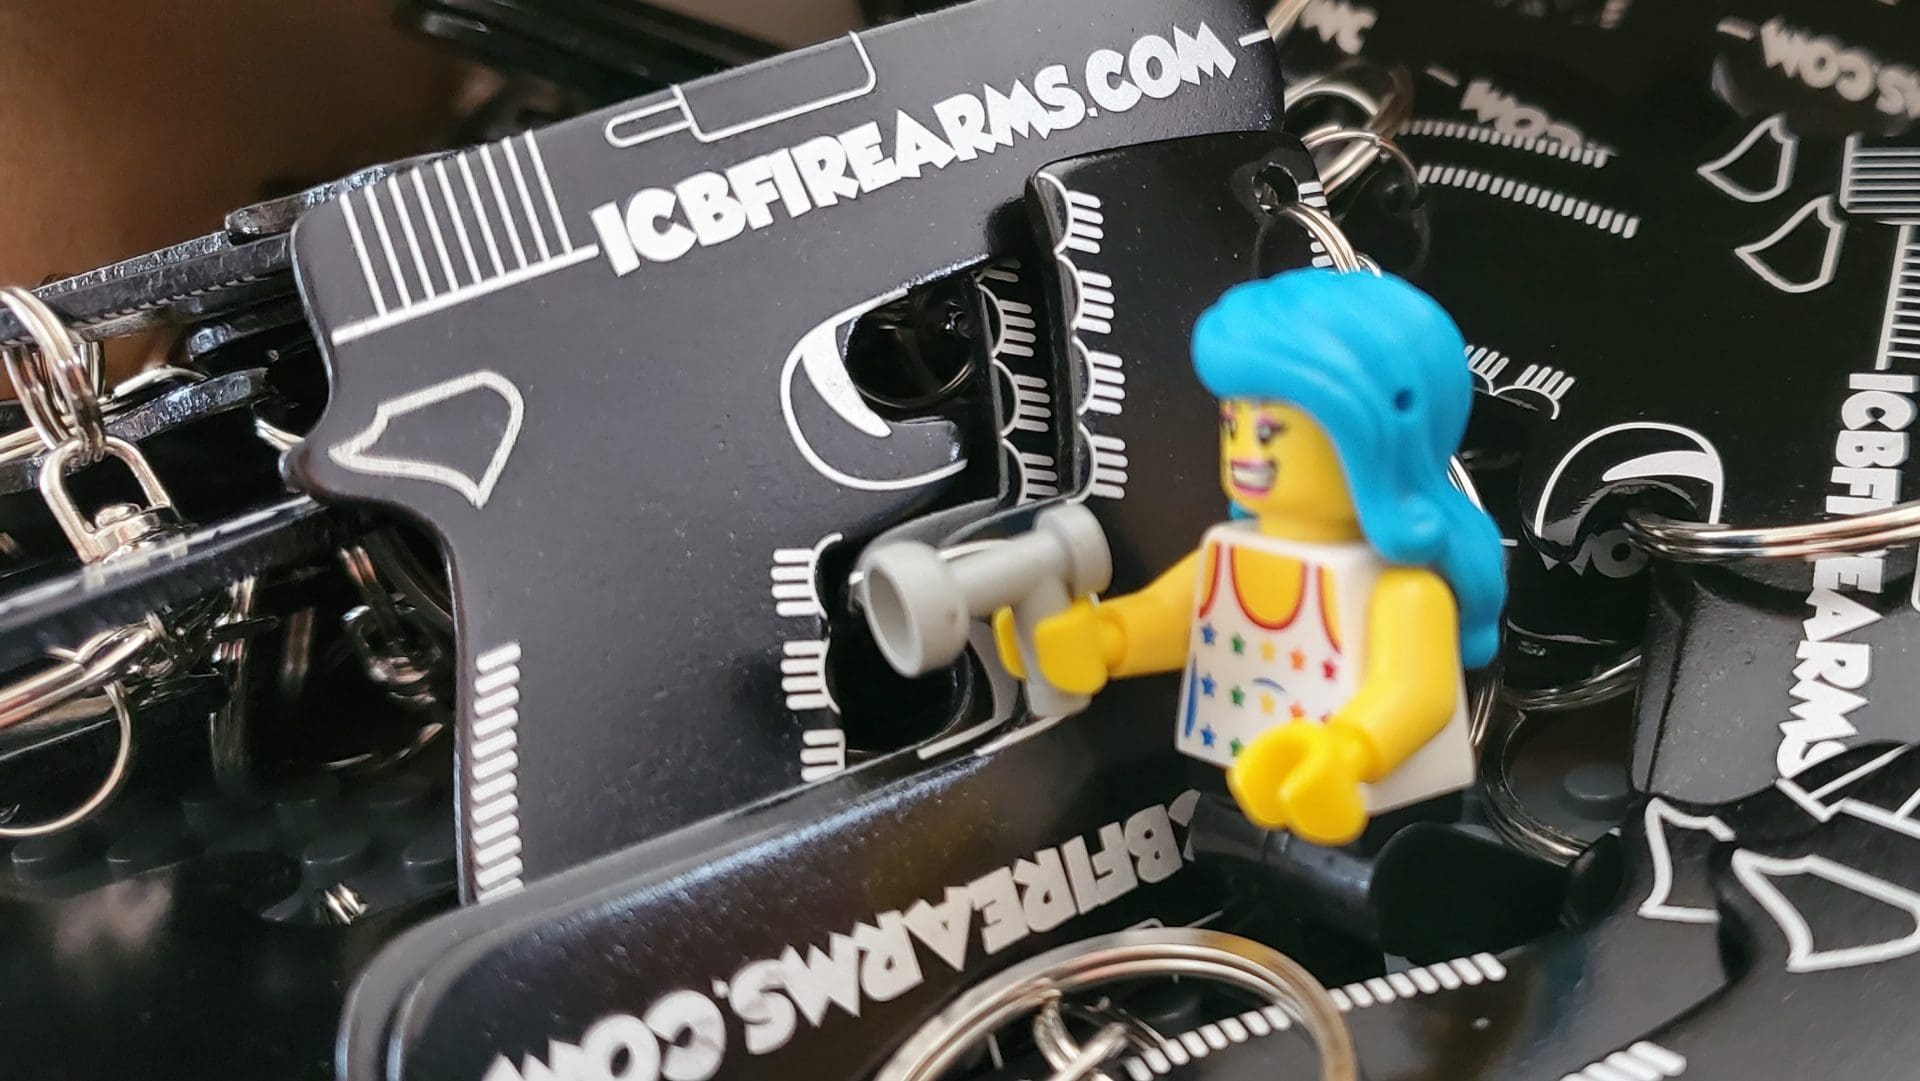 ICB Firearms - Gun Key chain Bottle Opener Lego Photo 03